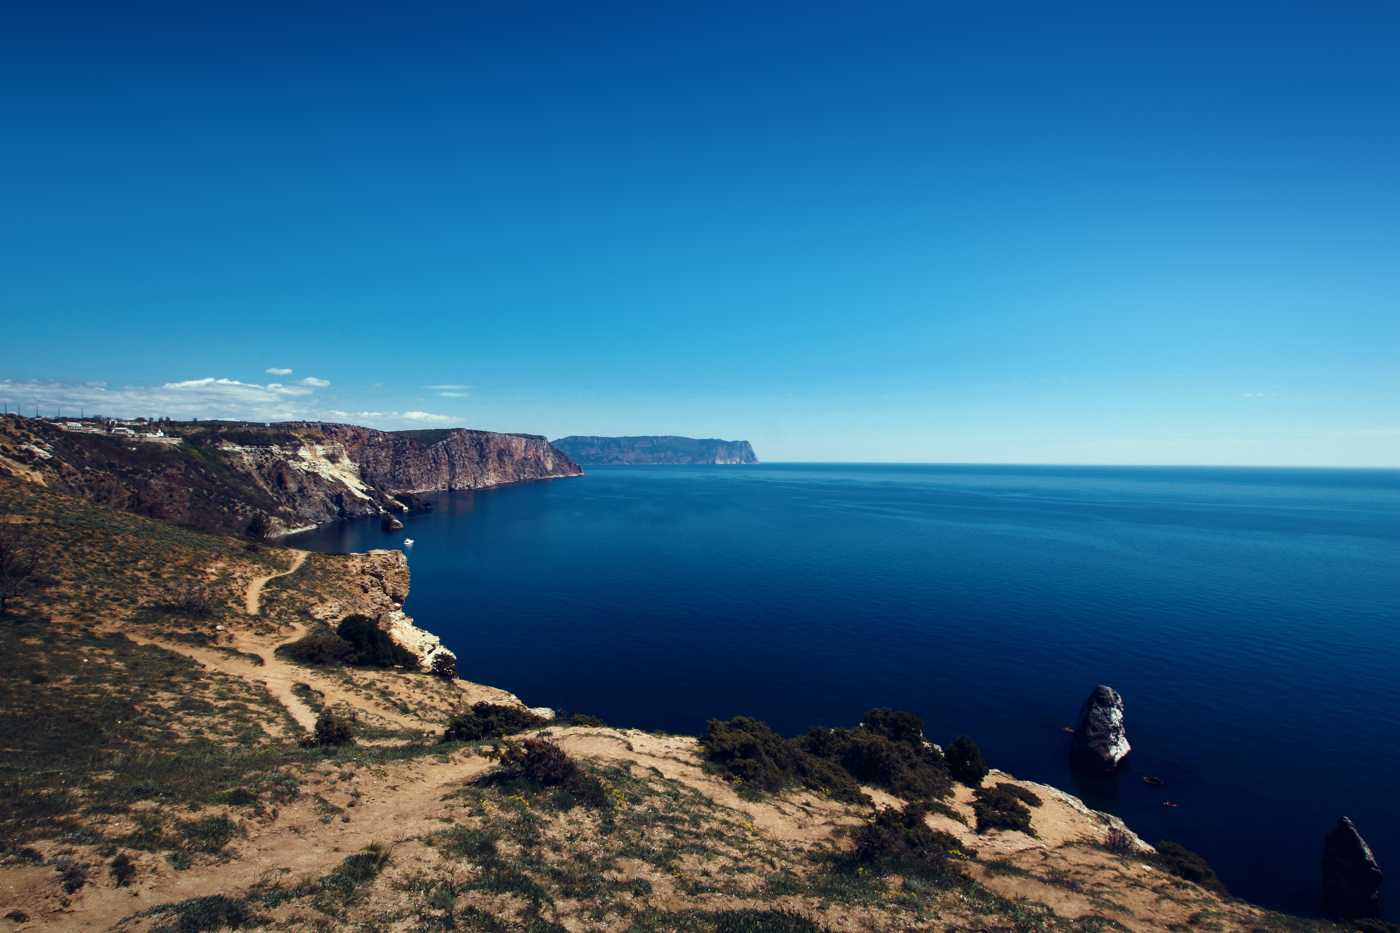 Bulgarian Schwarzmeerküste in the Nordic countries is picturesque with steep cliffs